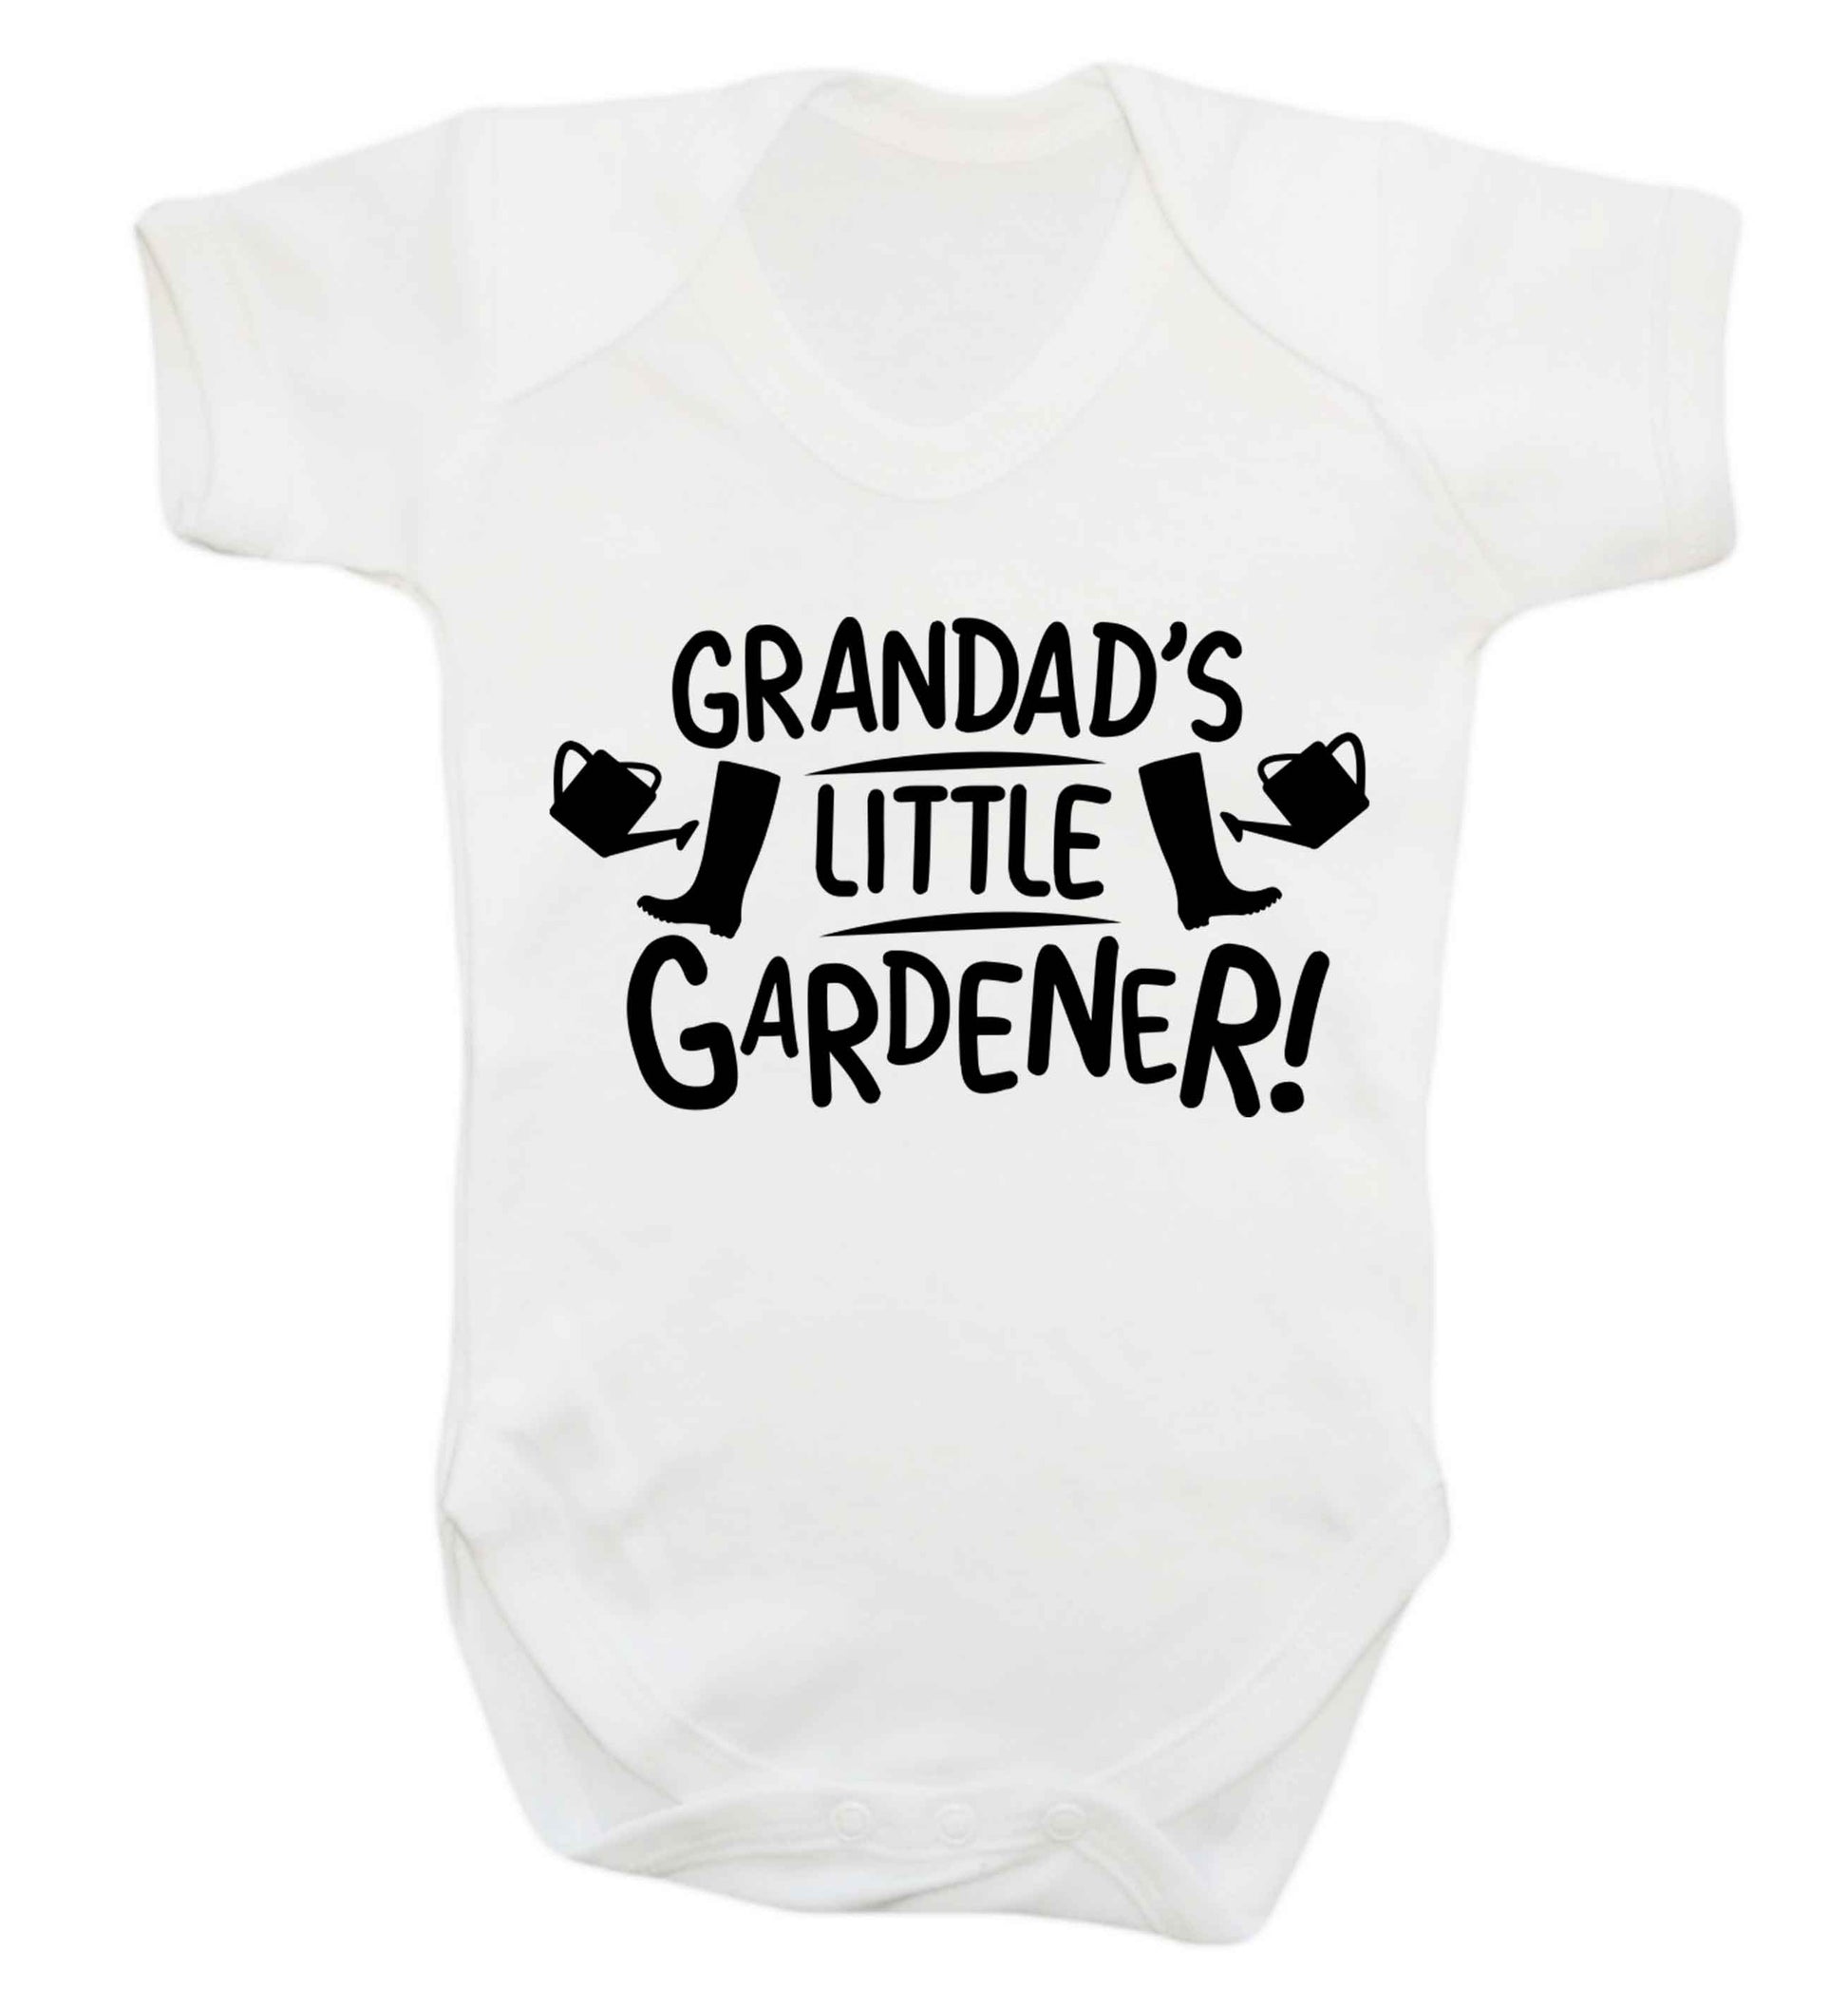 Grandad's little gardener Baby Vest white 18-24 months